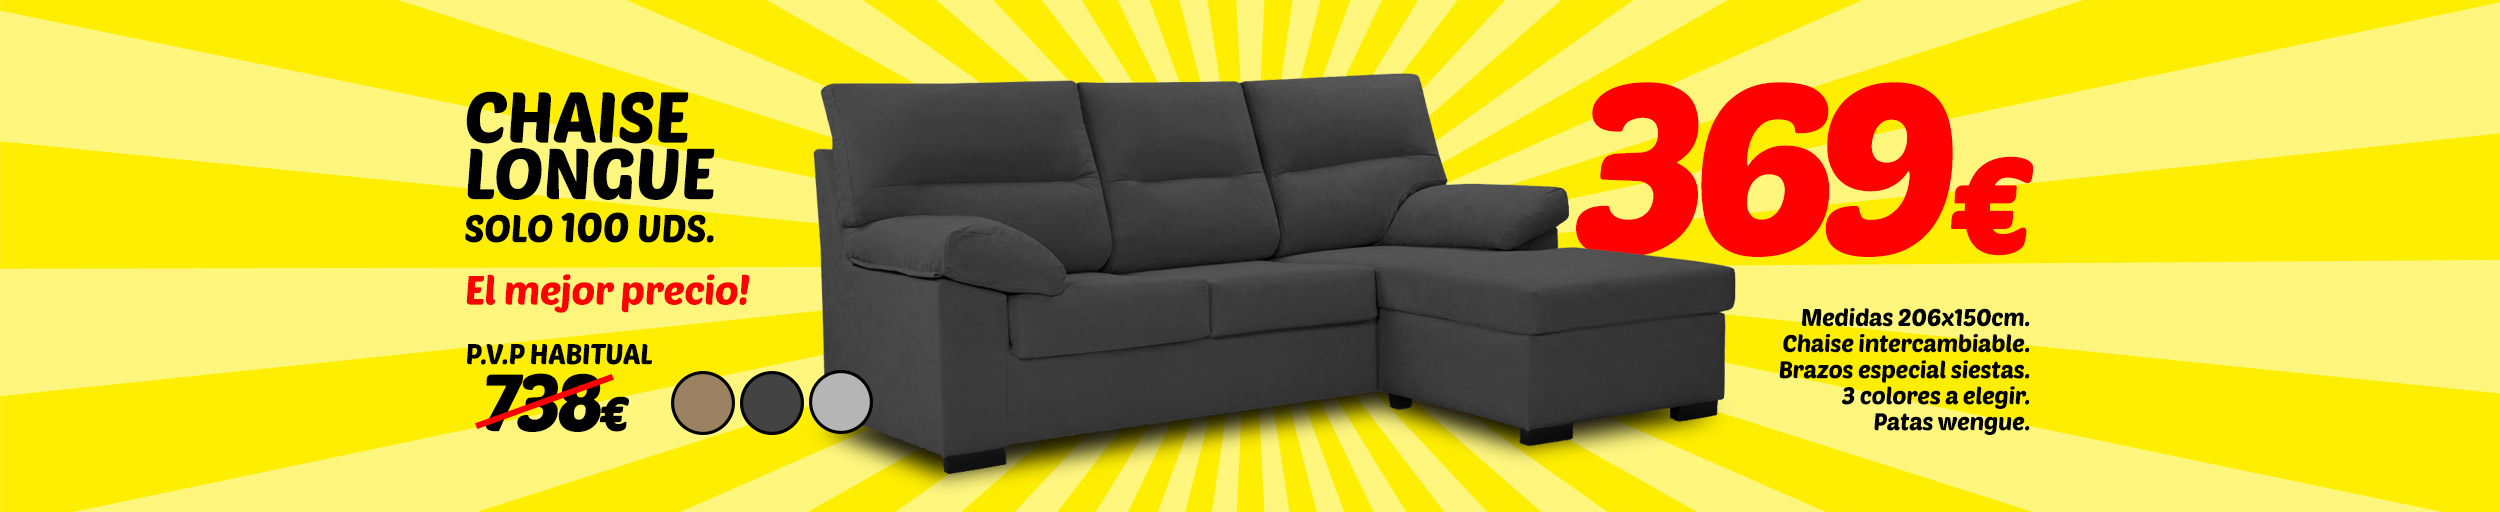 sofa chaiselongue oferta